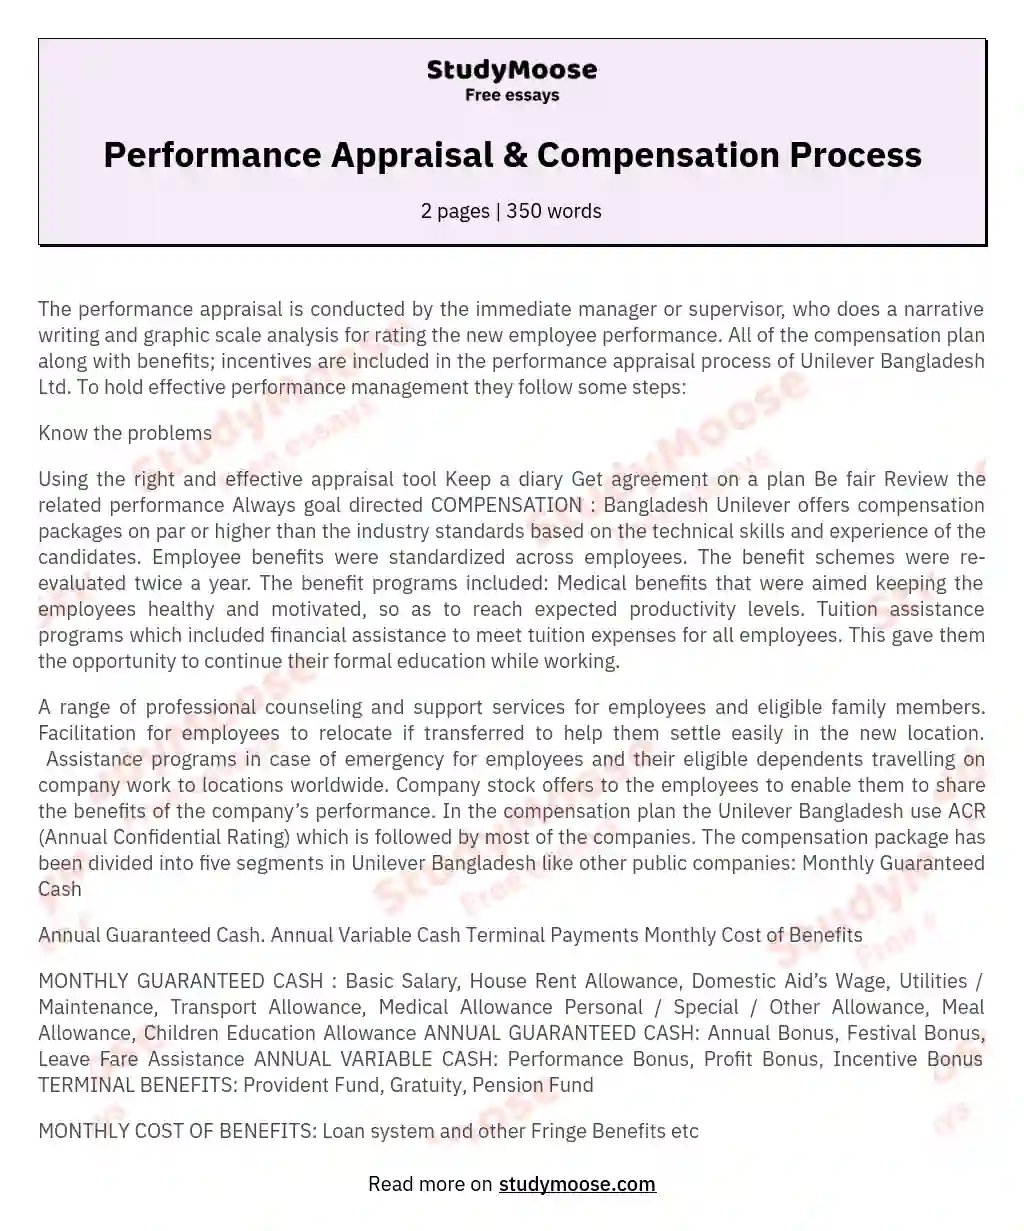 Performance Appraisal & Compensation Process essay